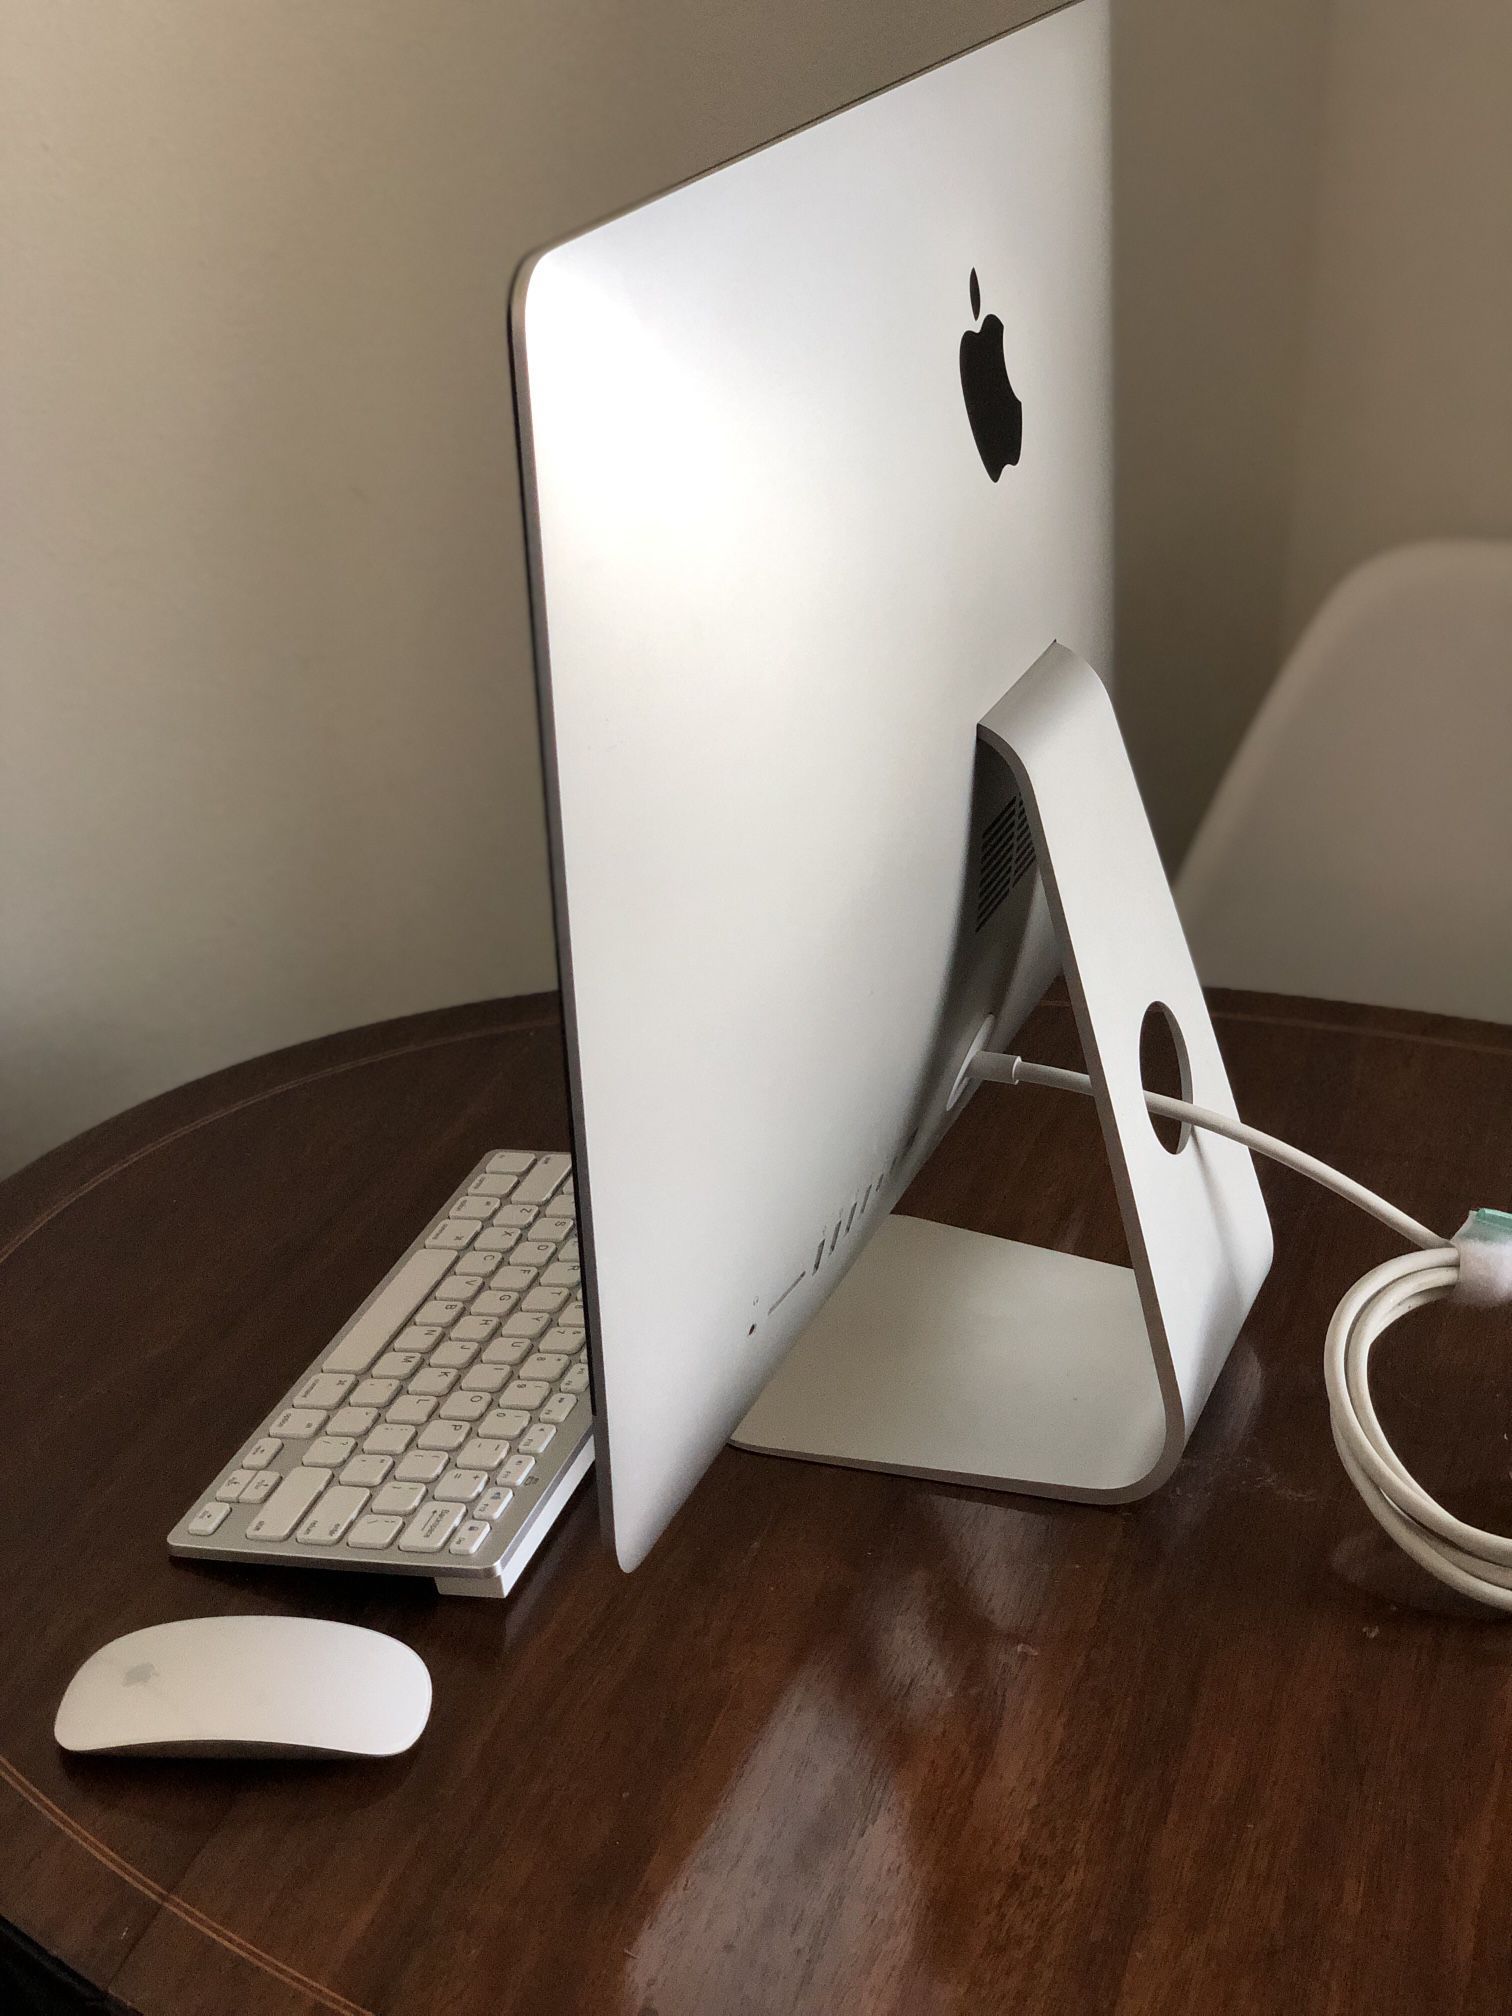 iMac 21.5 Inch., mid 2014  i5 . Ram 8 Gb  HD 500 Gb   OS Big Sur  Apple Wireless Mouse  Non-Apple Bluetooth Keyboard  